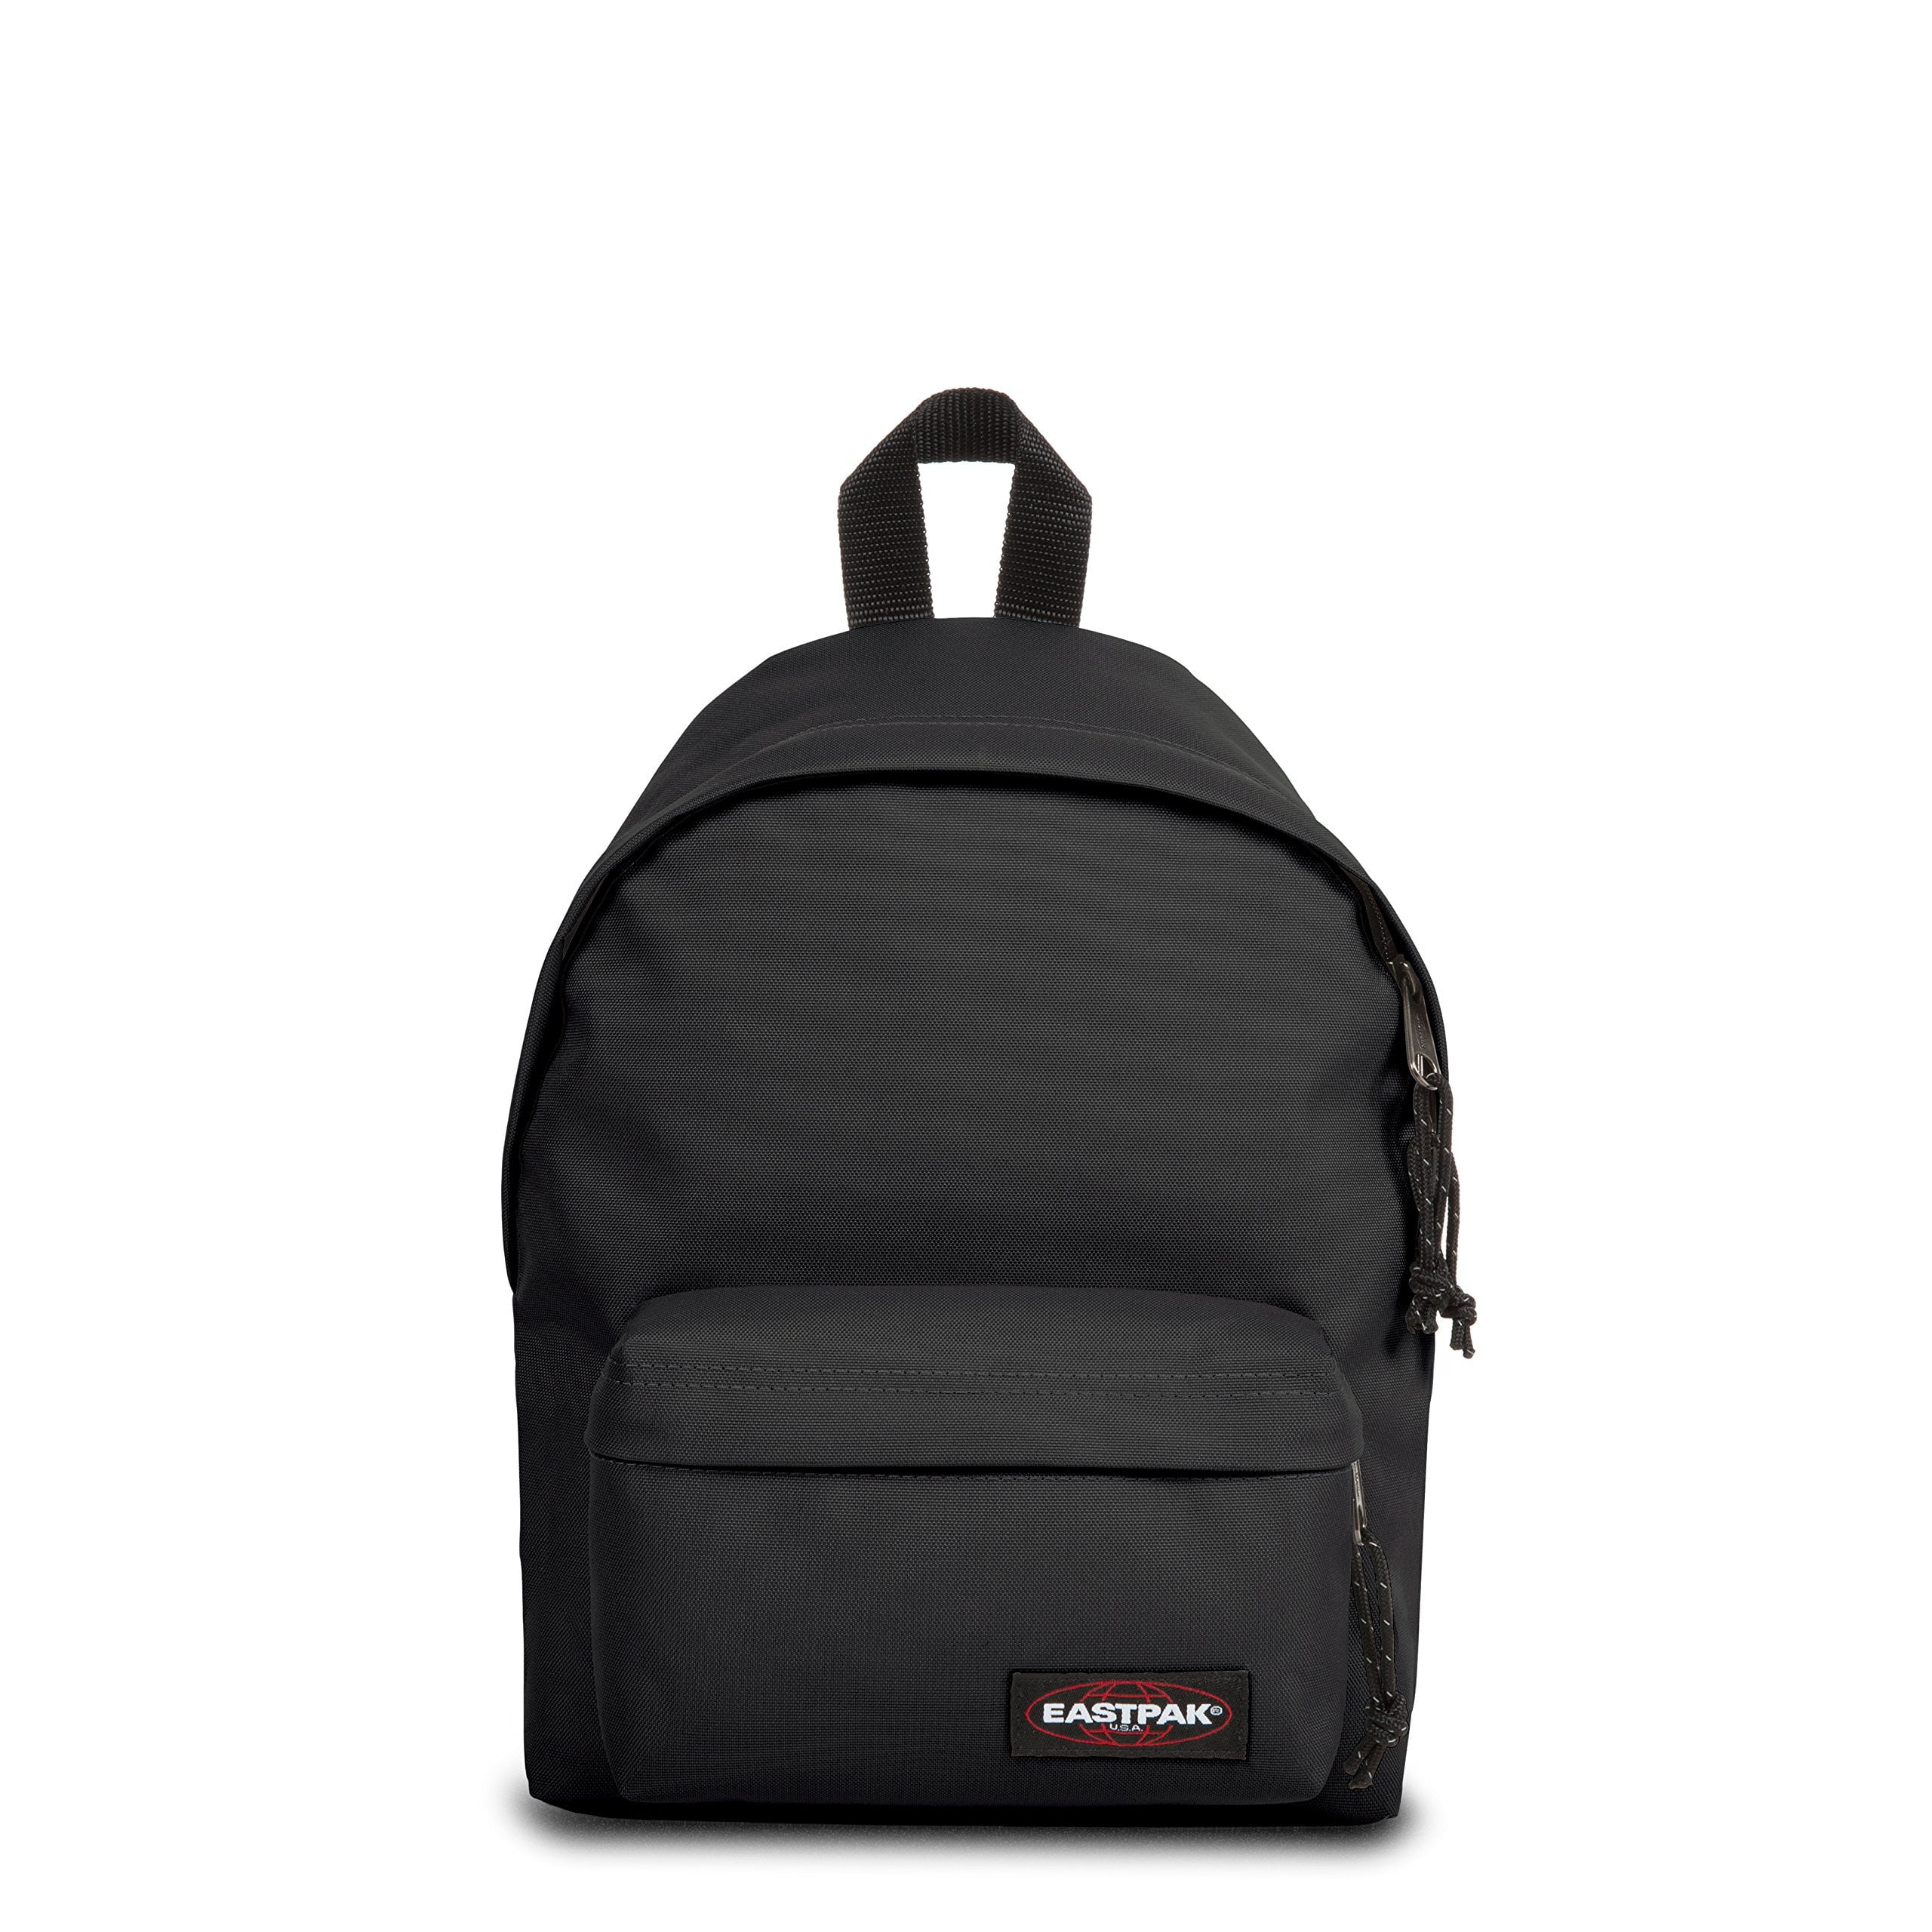 EASTPAK Handbags & Purses - Orbit Nylon Zip Top Small Unisex Travel Backpack Bag One Size ...